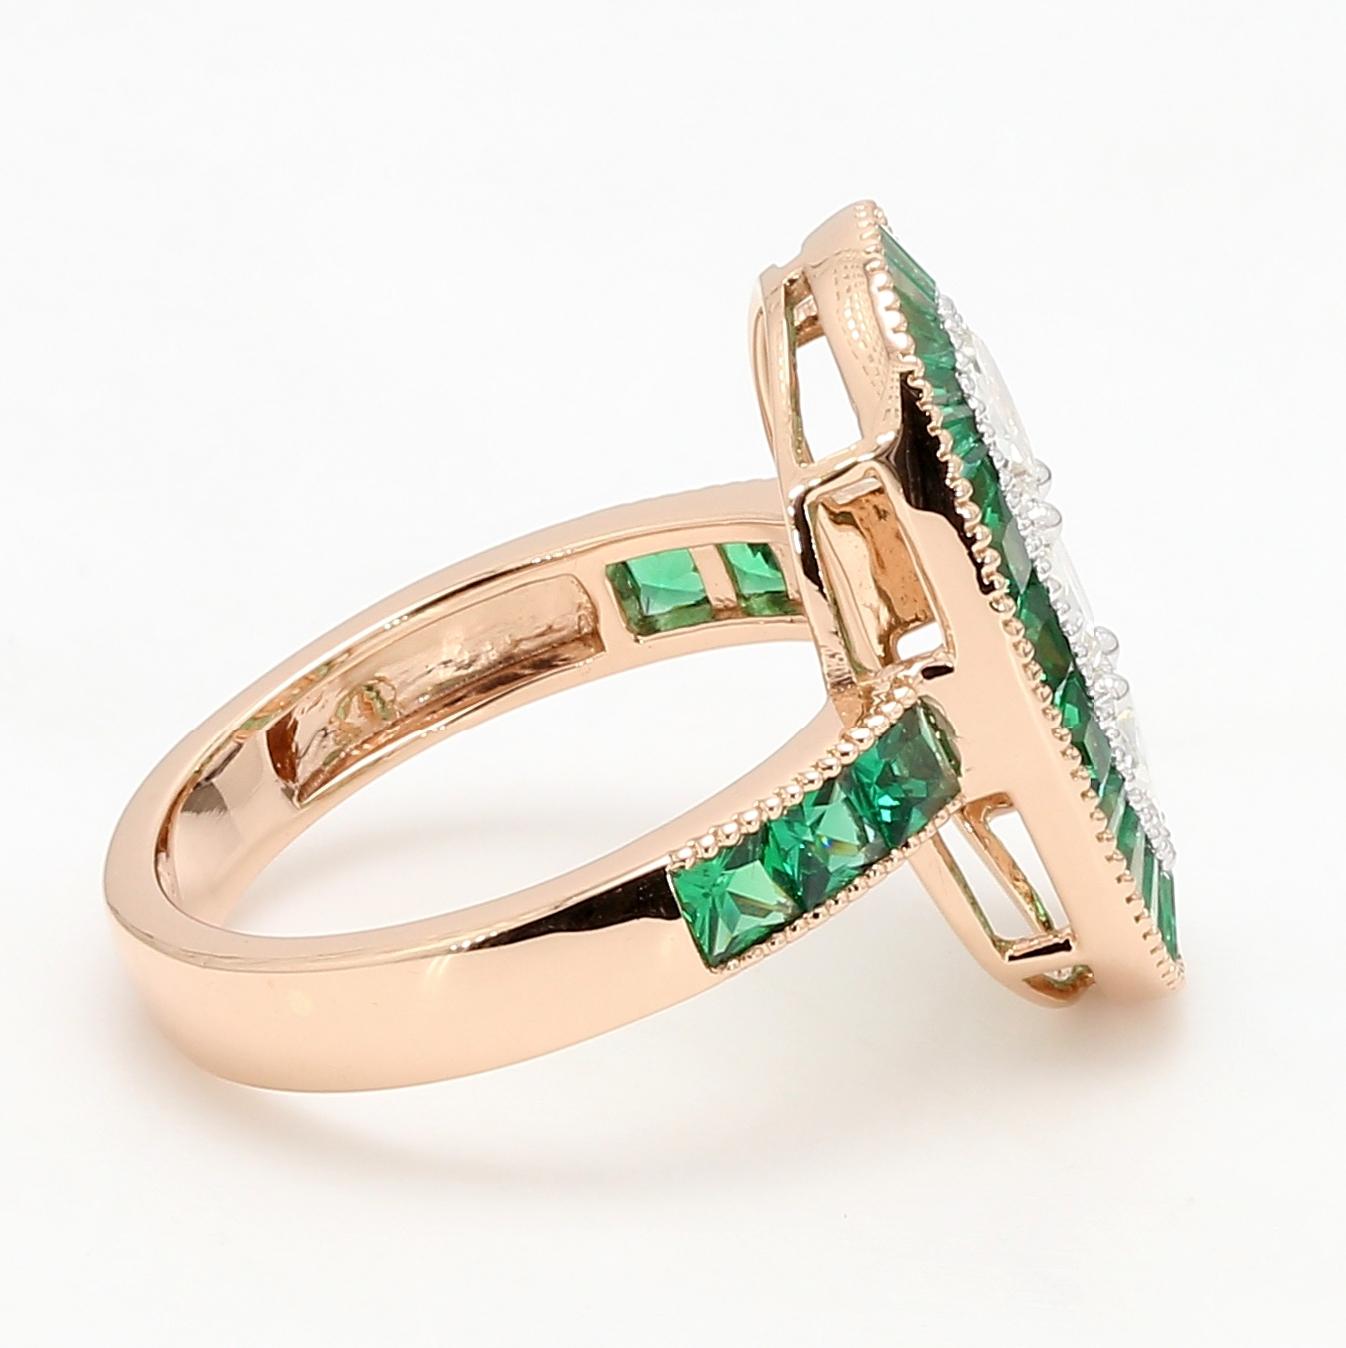 PANIM 18K Rose Gold Old Mine Cut Diamond & Emerald Ring For Sale 1